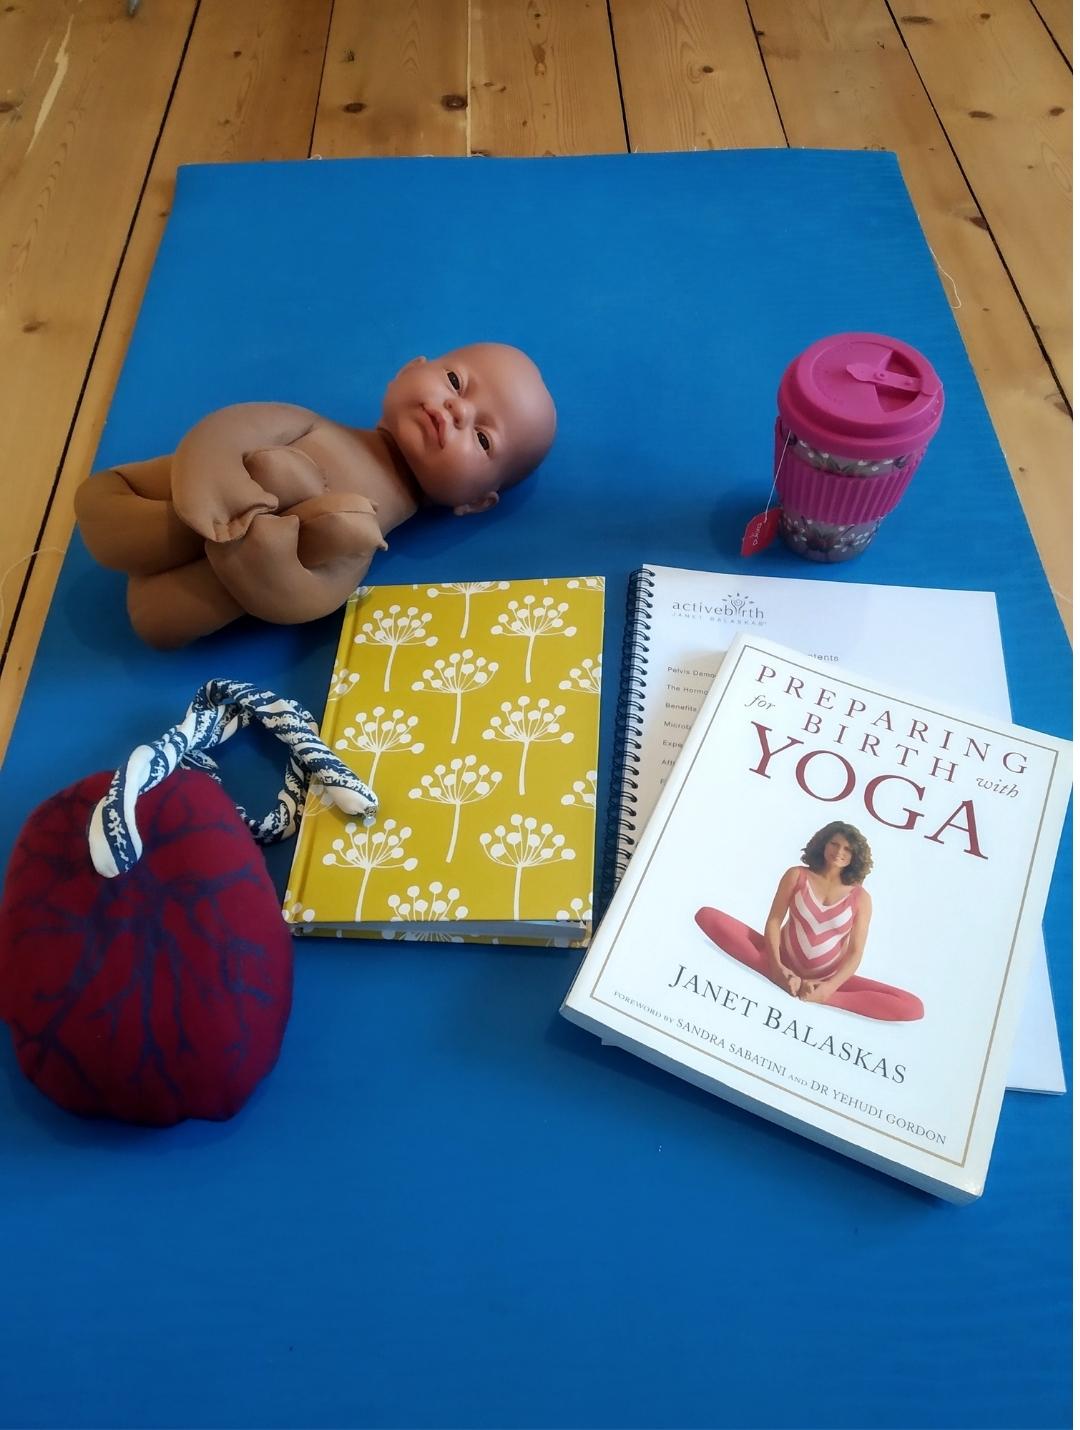 Pregnancy Yoga Teacher Training Reading Material